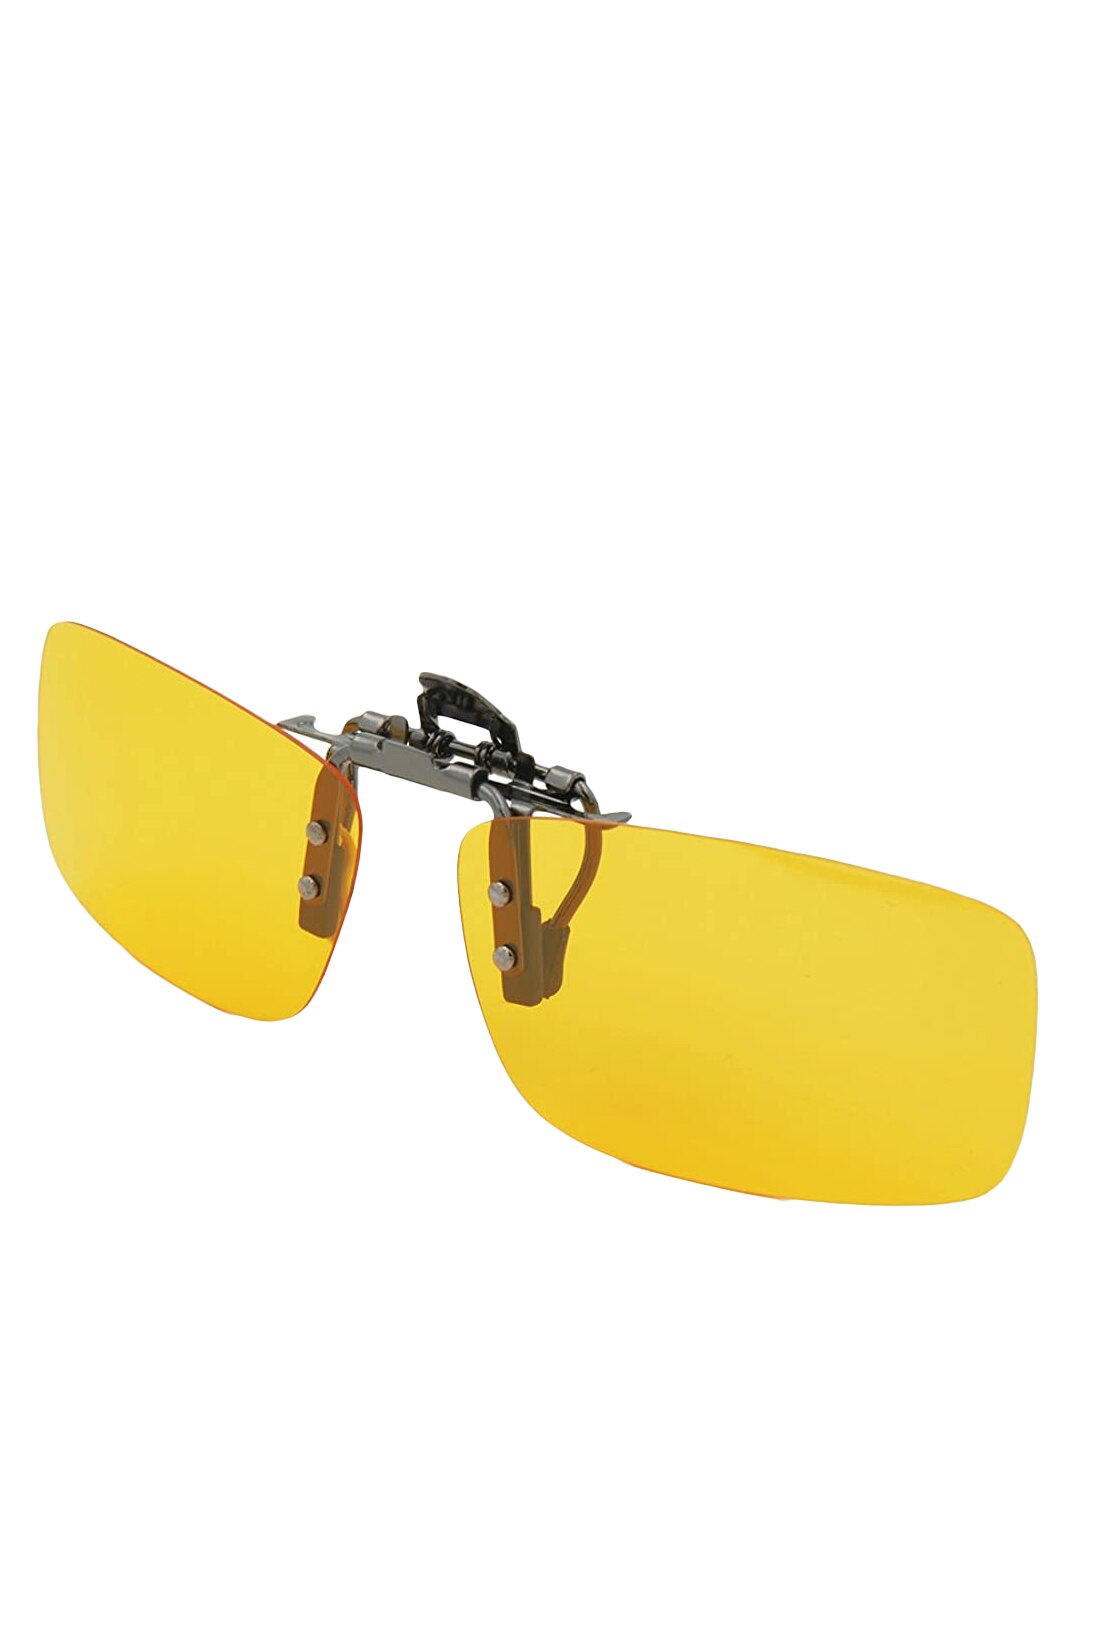 Lentile polarizate pentru ochelari SunnyLens, universale, sistem de prindere cu UVA si UVB, Doty - eMAG.ro